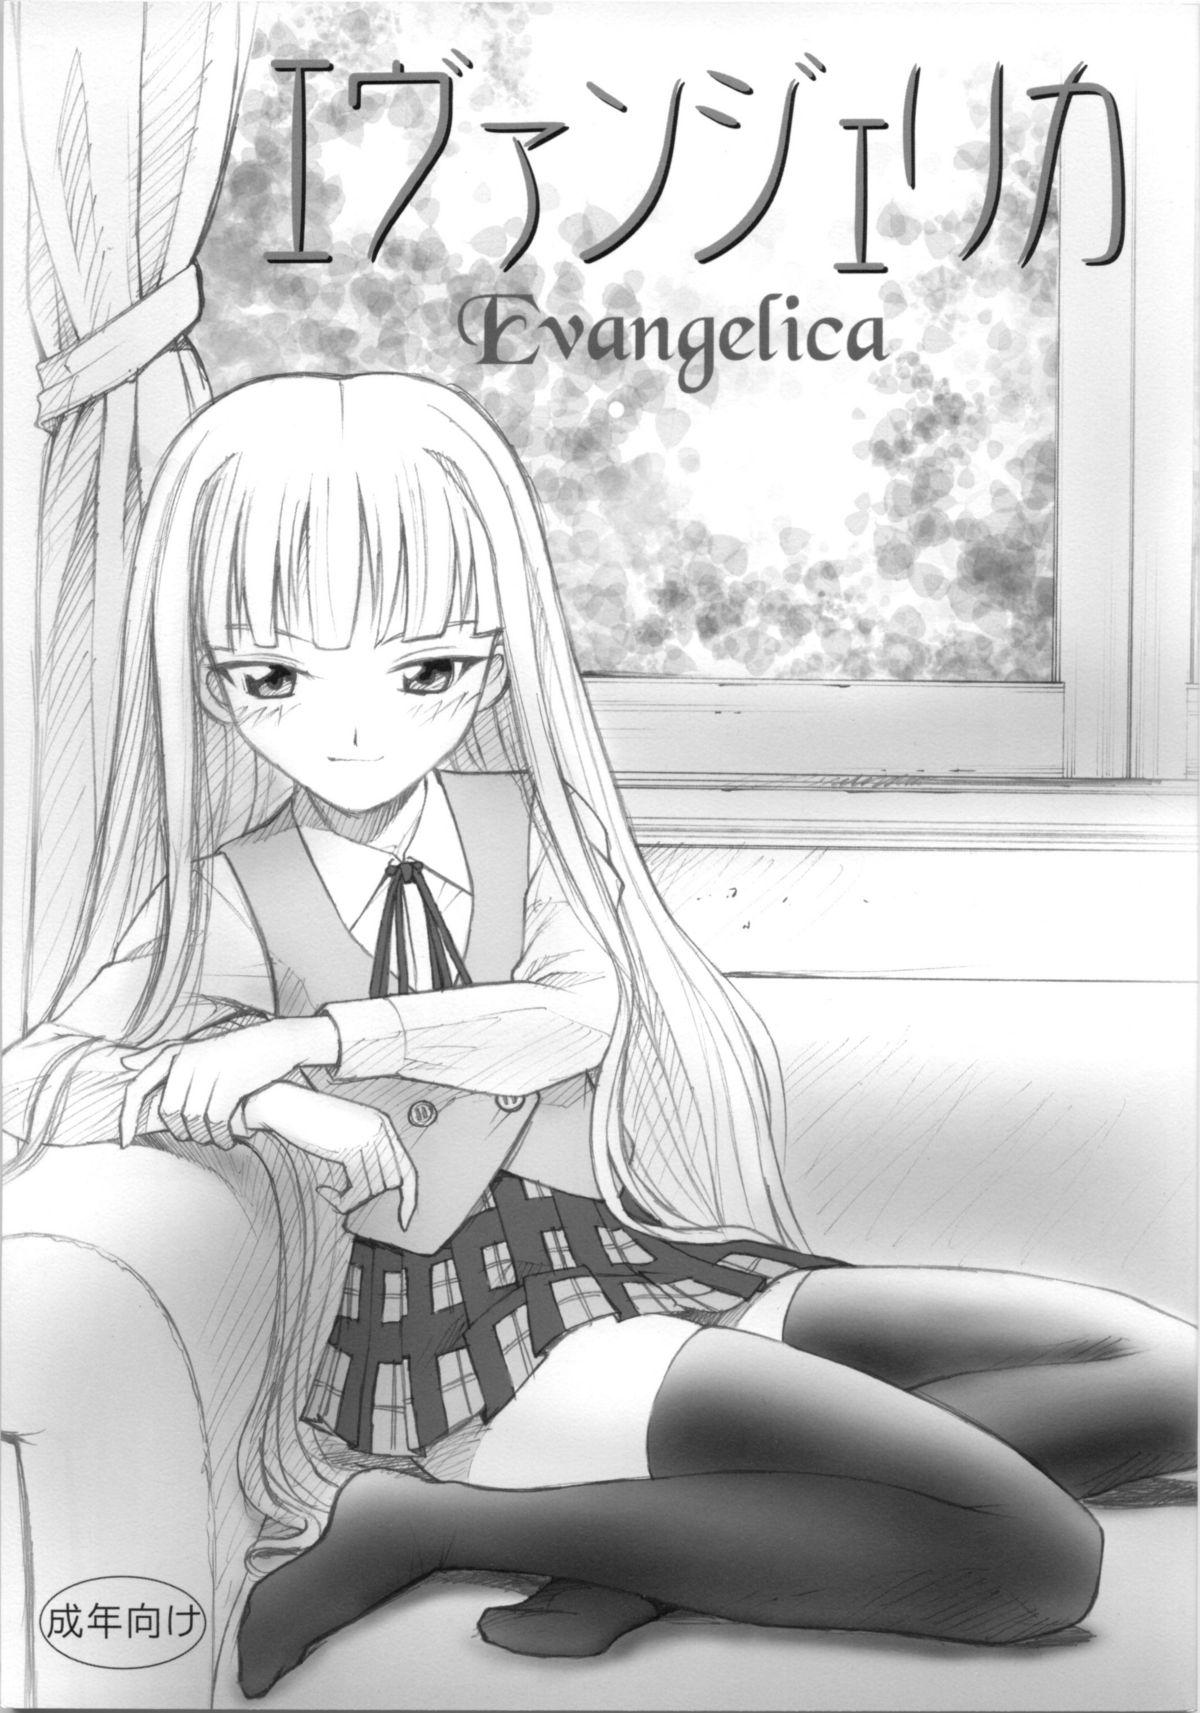 Fucked Evangelica - Mahou sensei negima Freaky - Picture 1